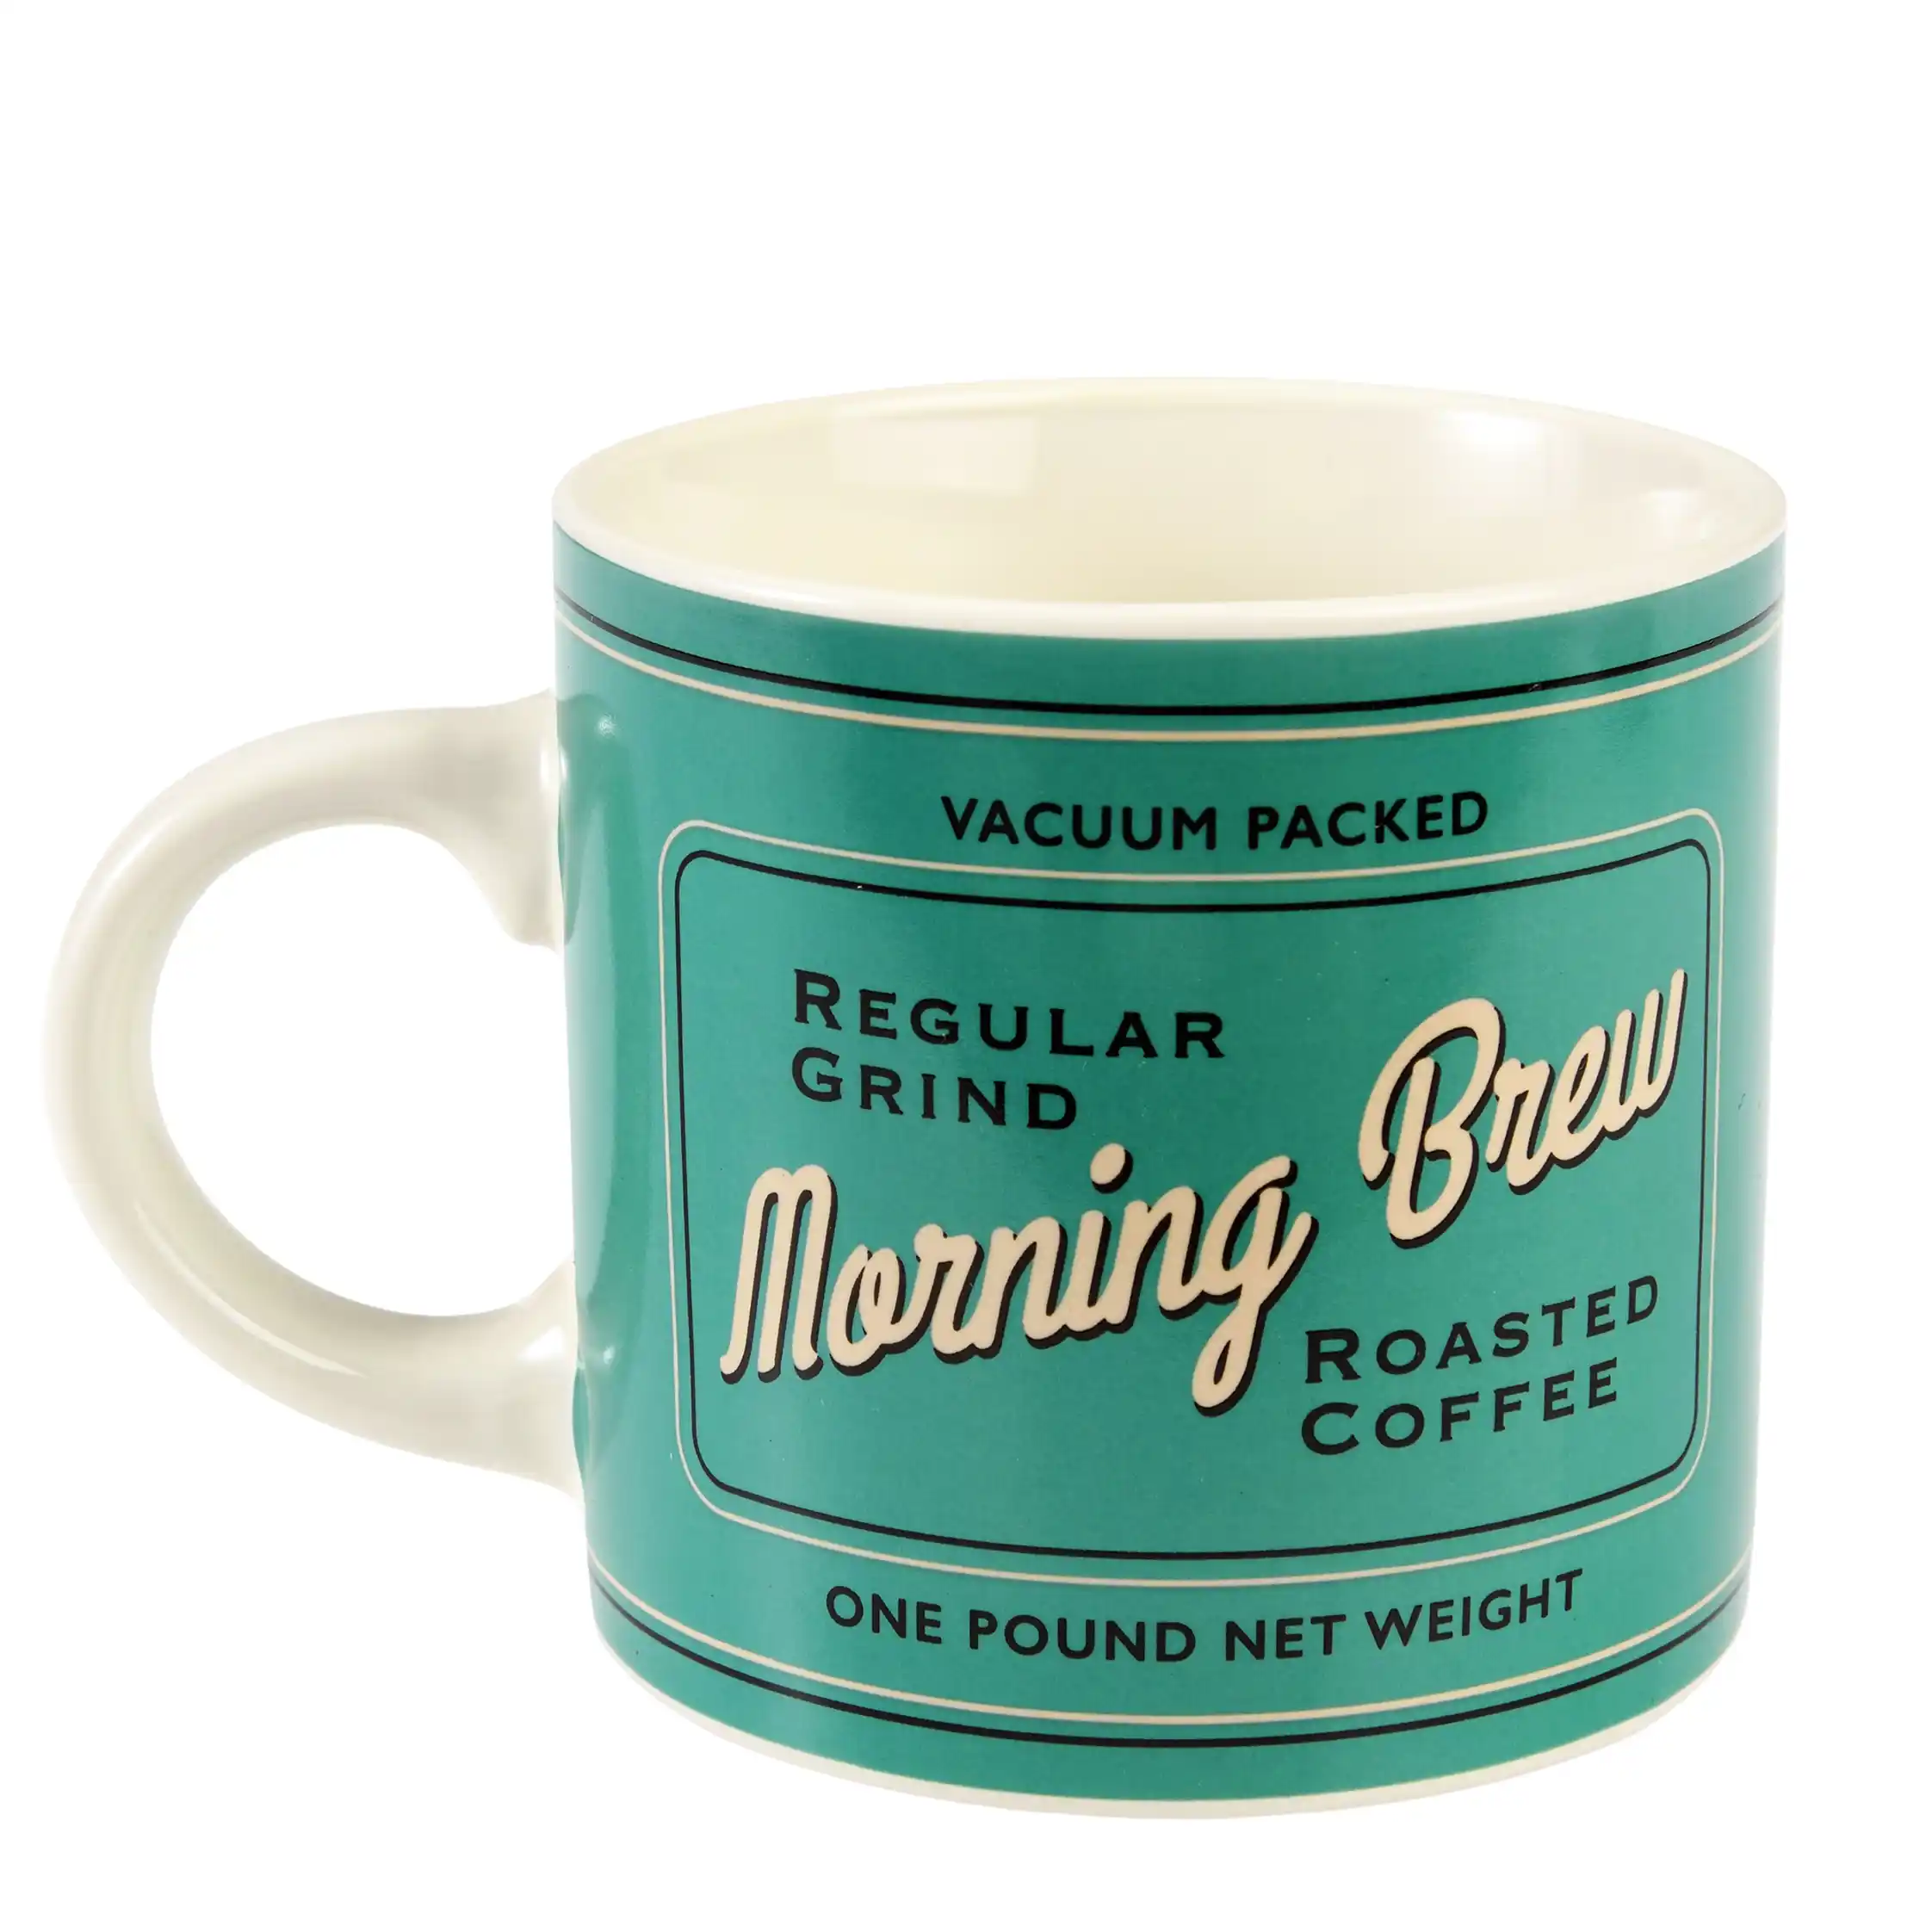 vintage coffee mug - morning brew